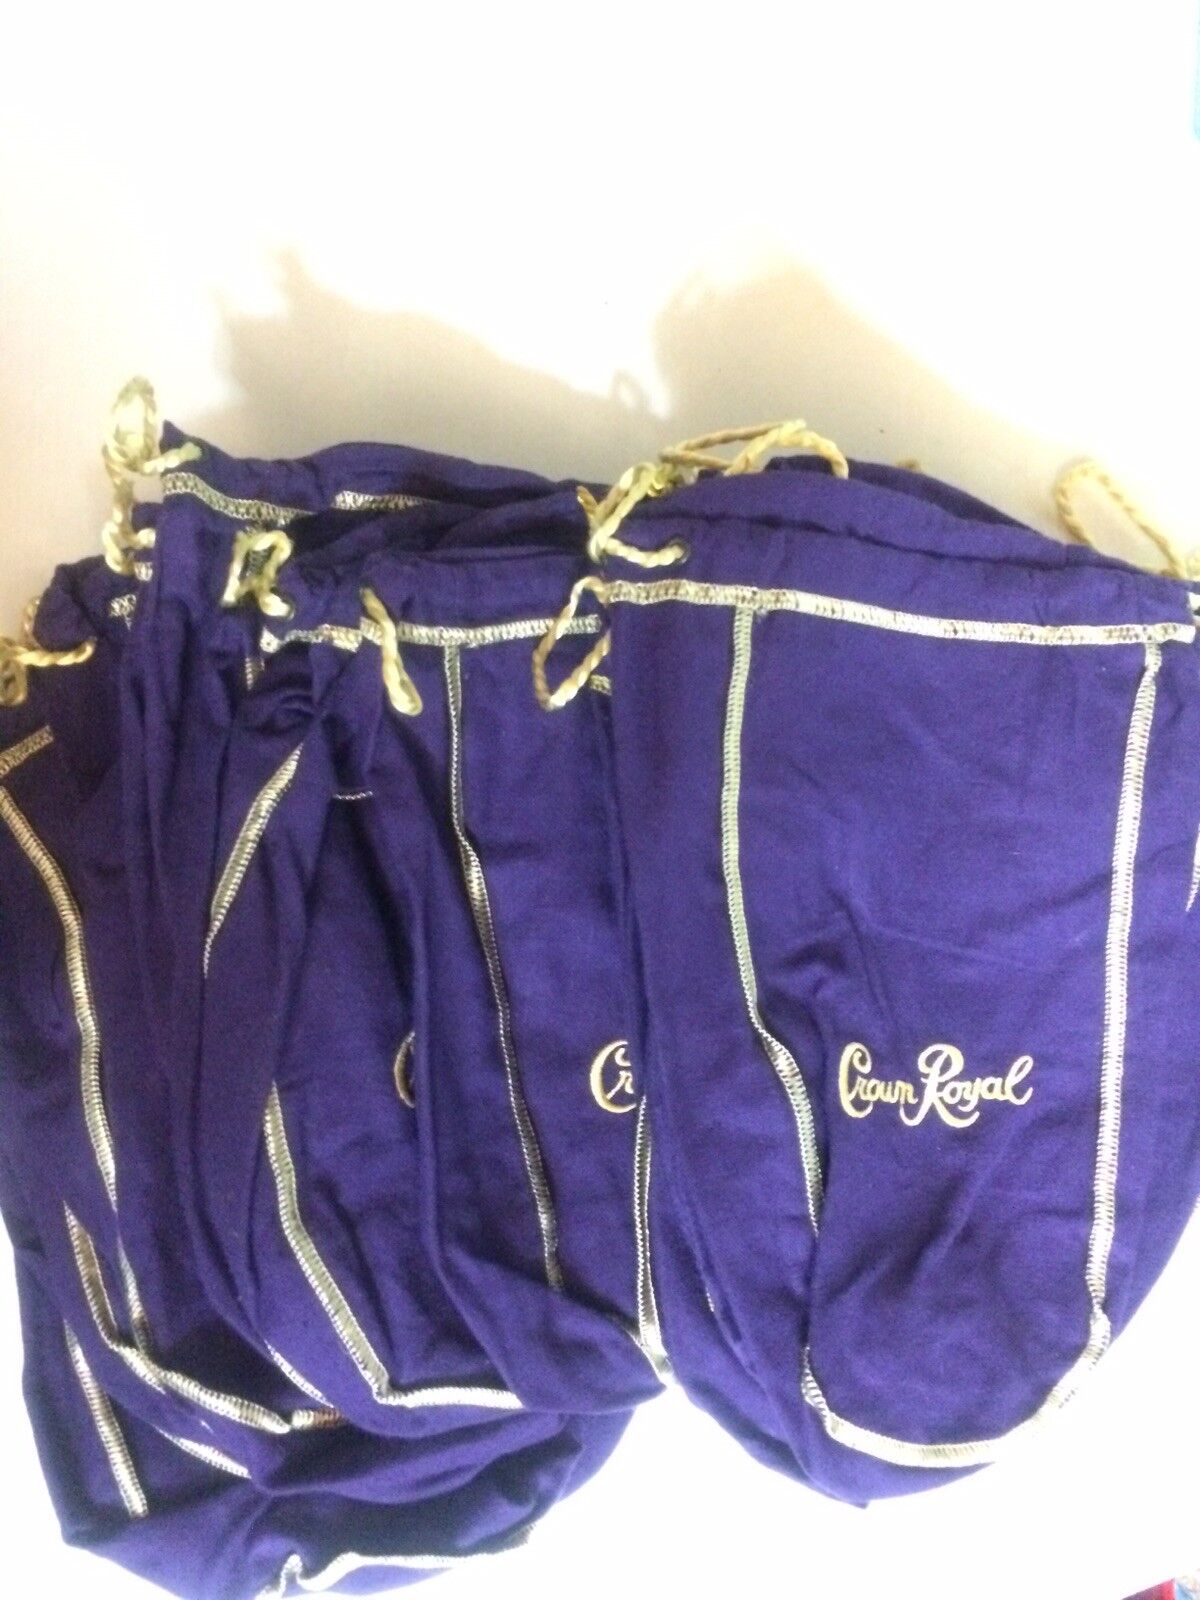 Crown Royal Bags lot of 50 750 ml large purple gold trim bags storage crafts